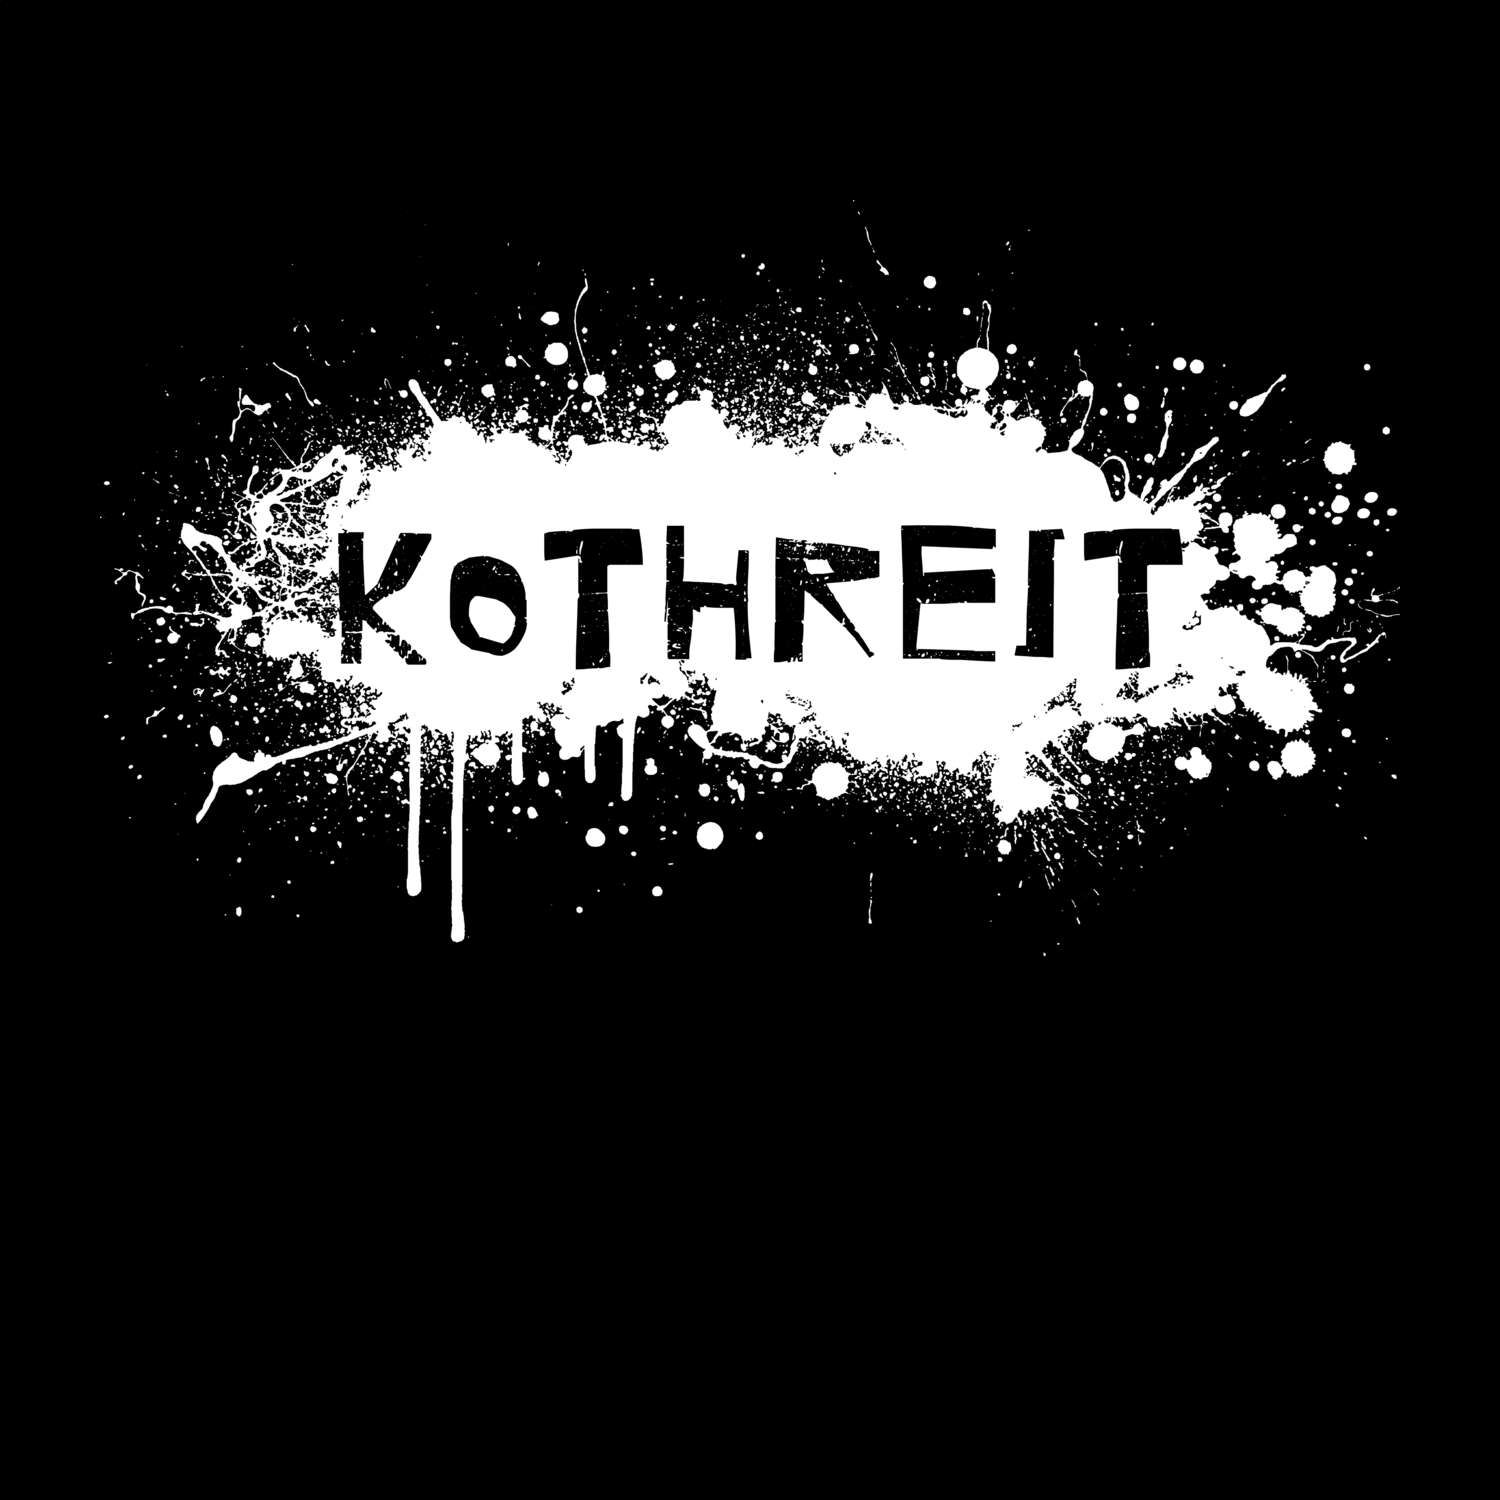 Kothreit T-Shirt »Paint Splash Punk«